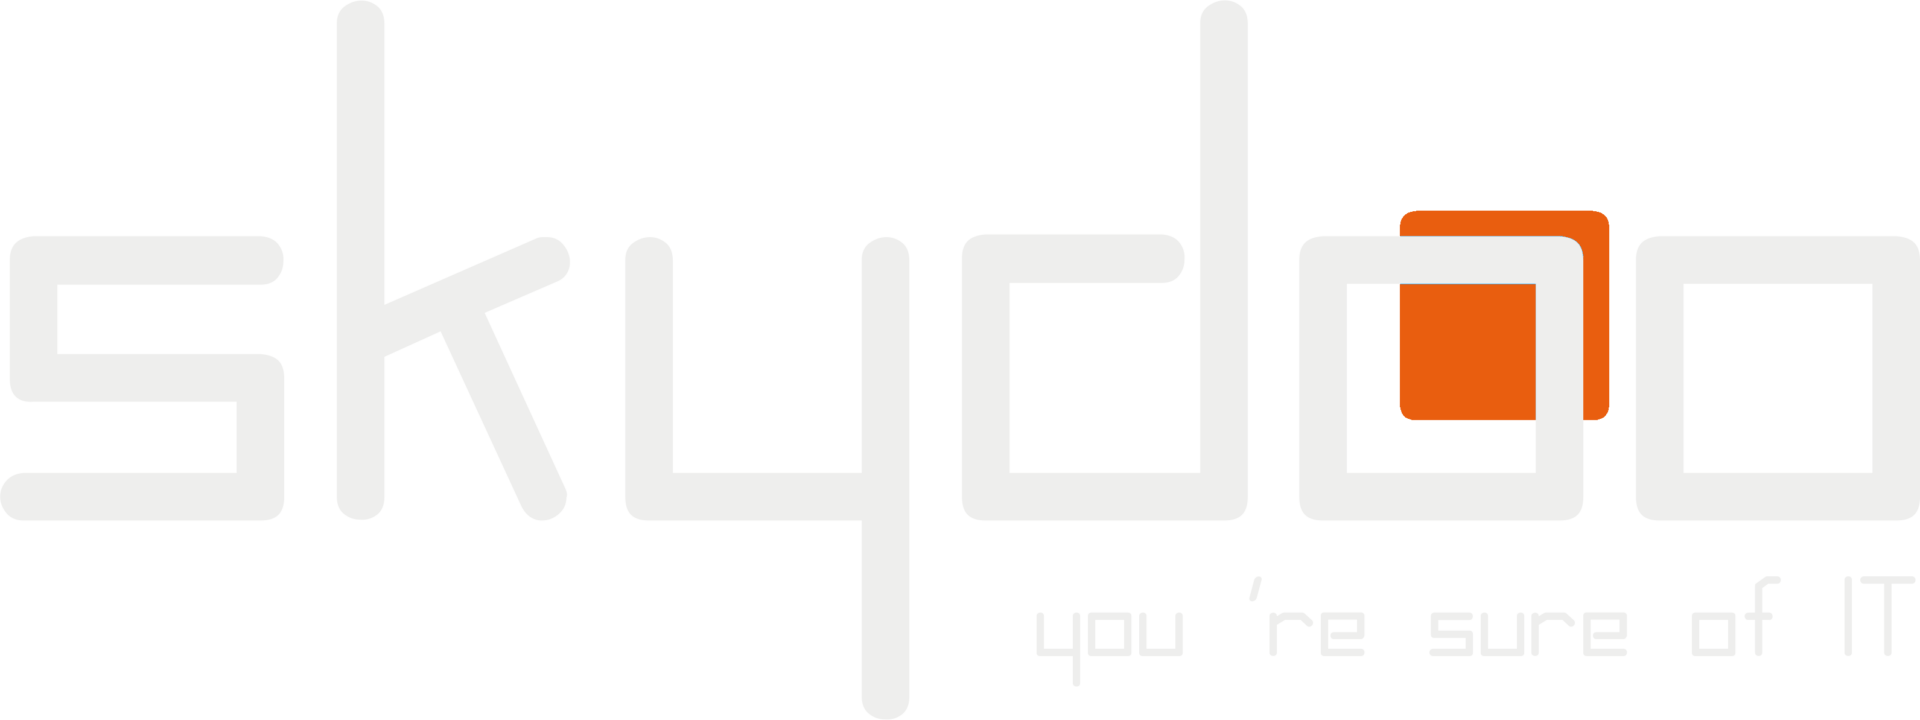 Logo de Skydoo